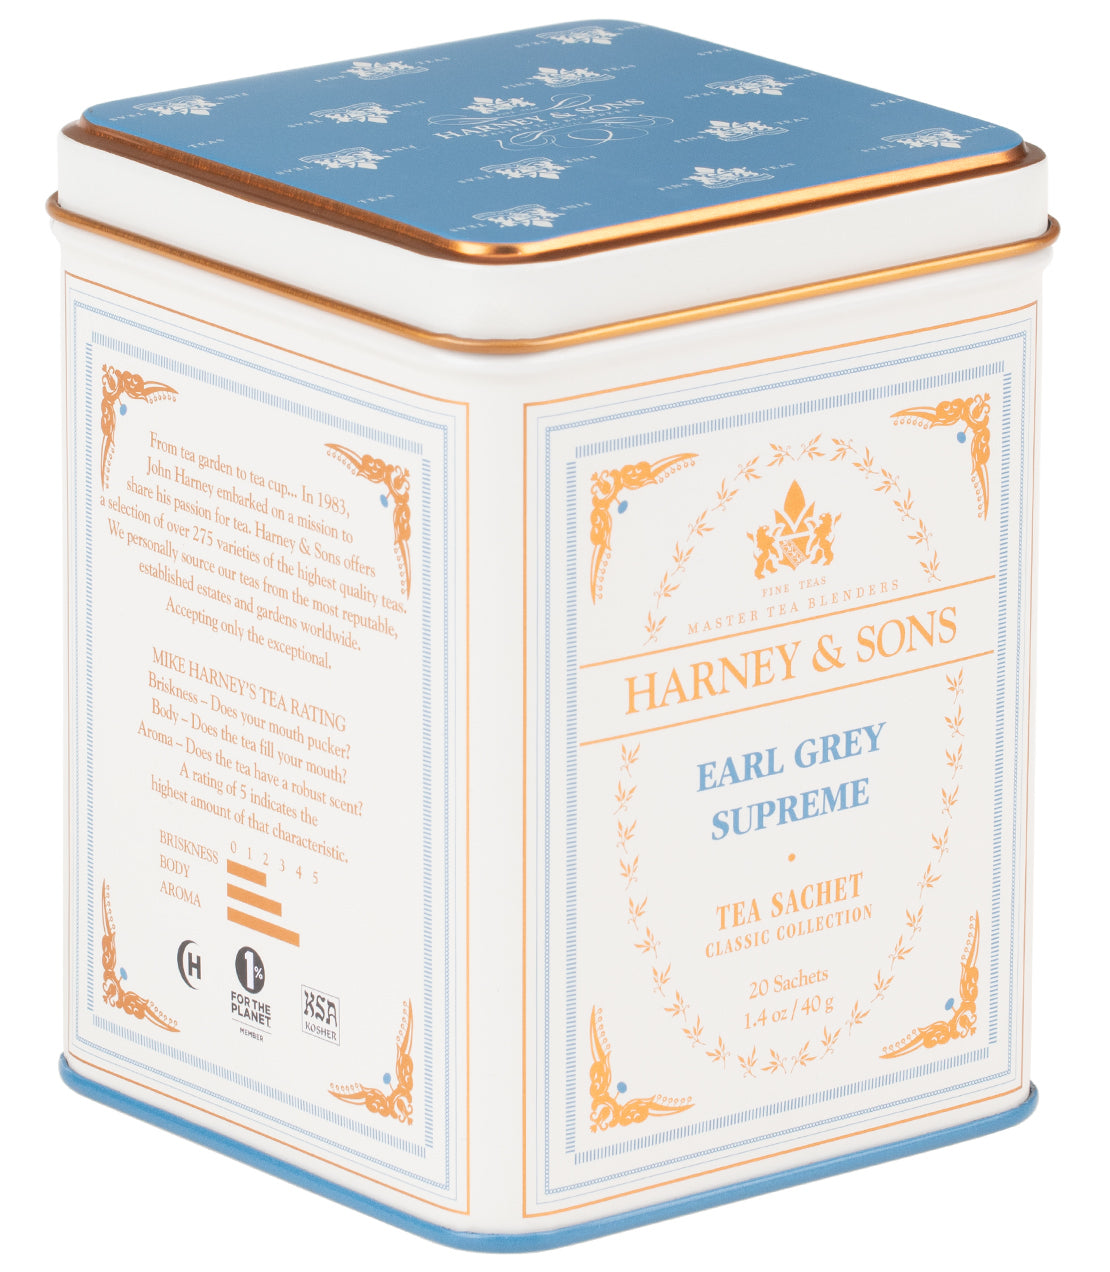 Earl Grey Supreme - Sachets Classic Tin of 20 Sachets - Harney & Sons Fine Teas